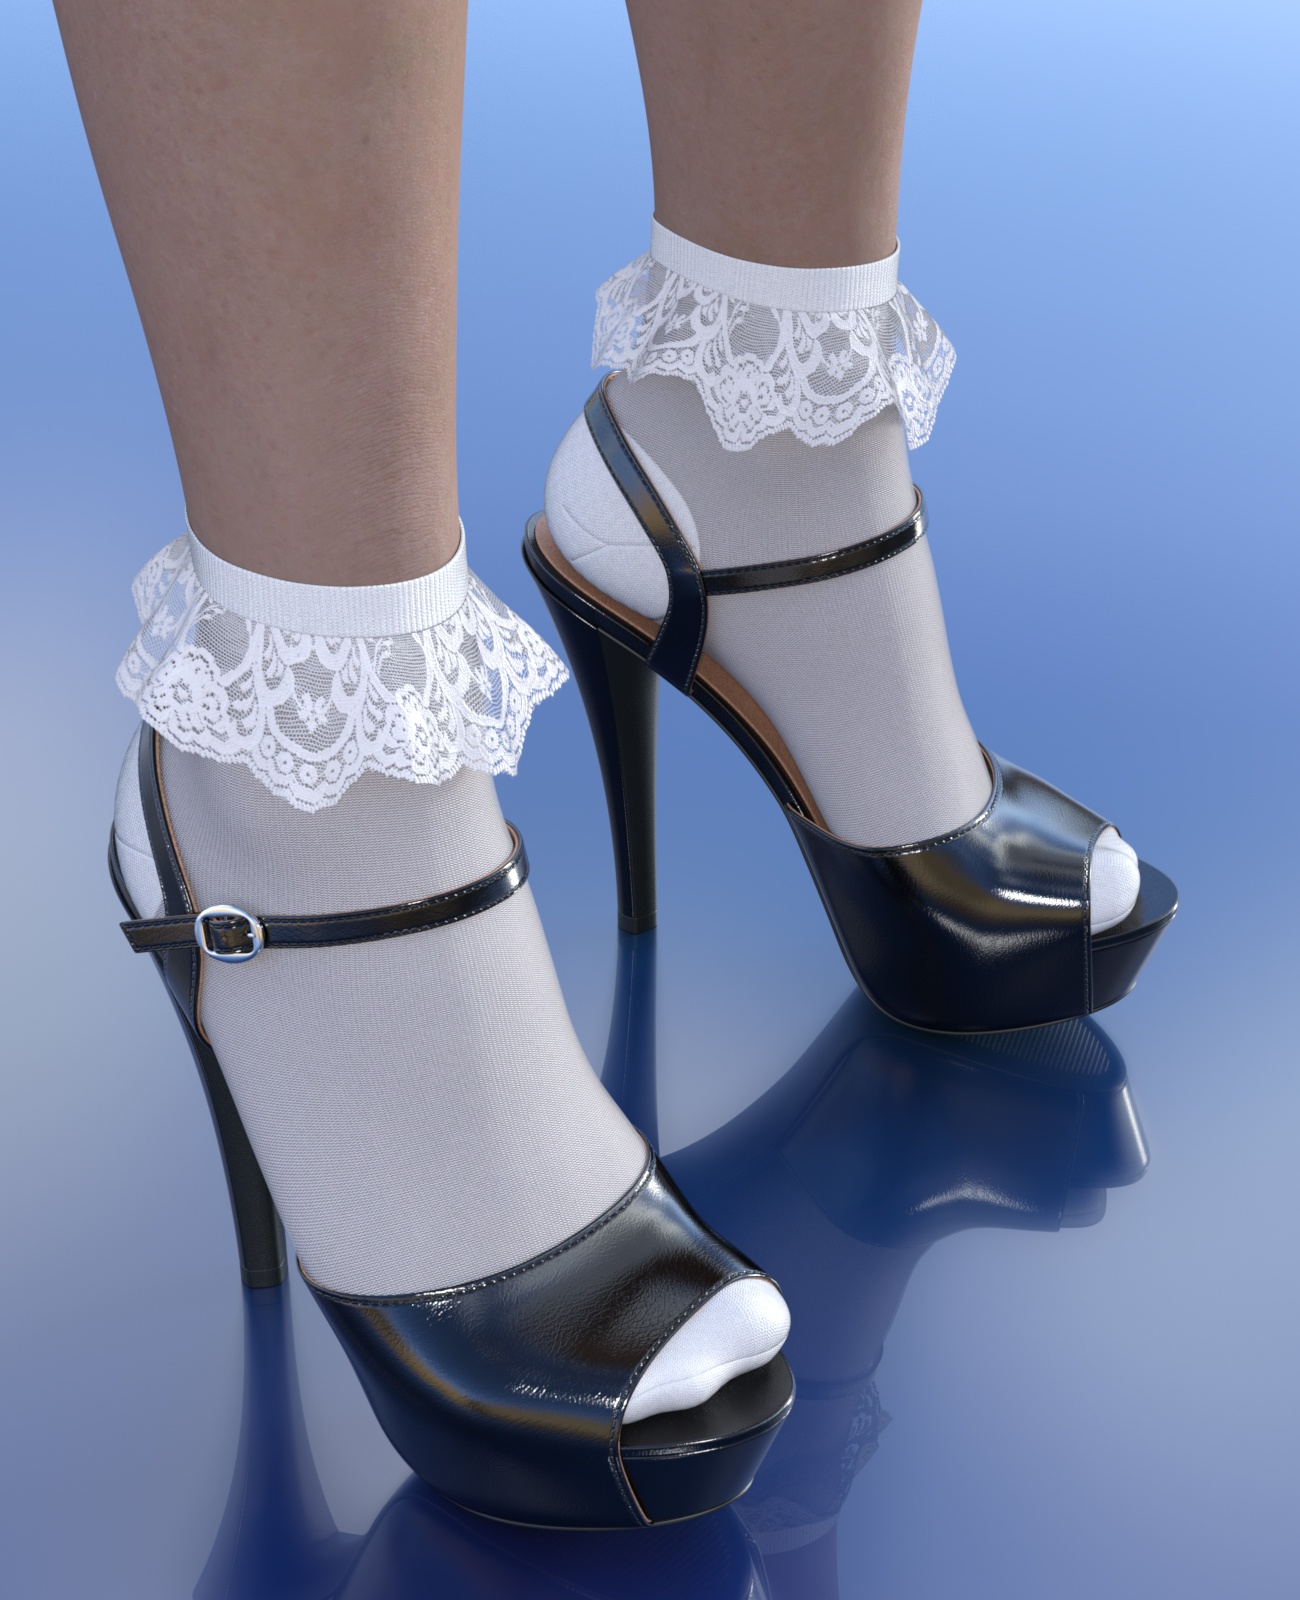 platform heels with socks